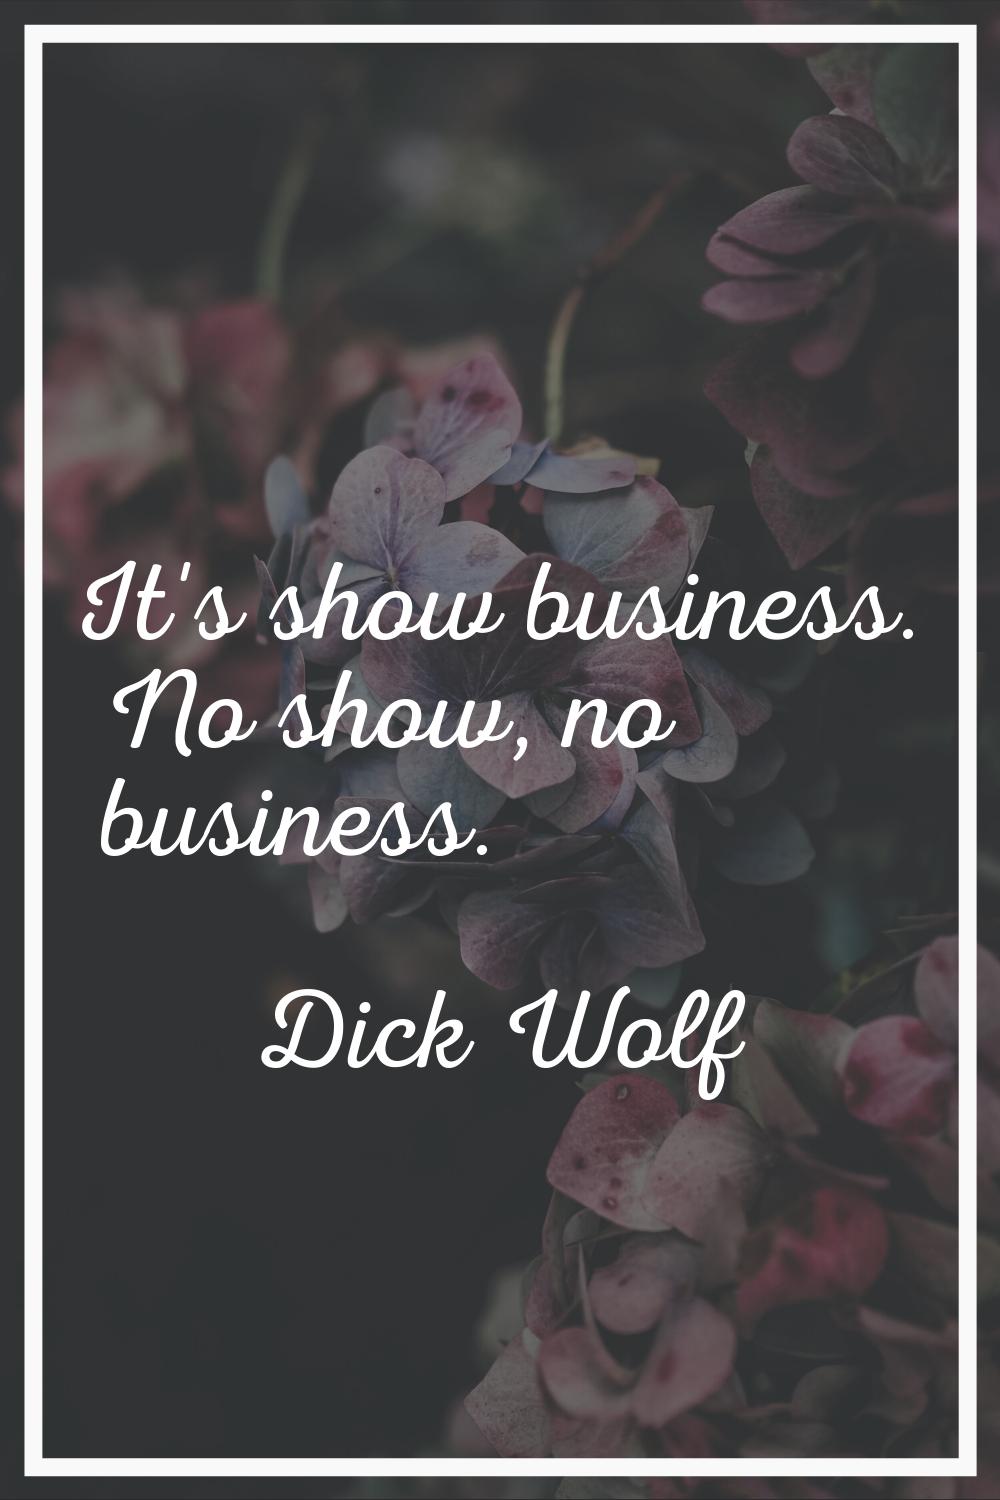 It's show business. No show, no business.